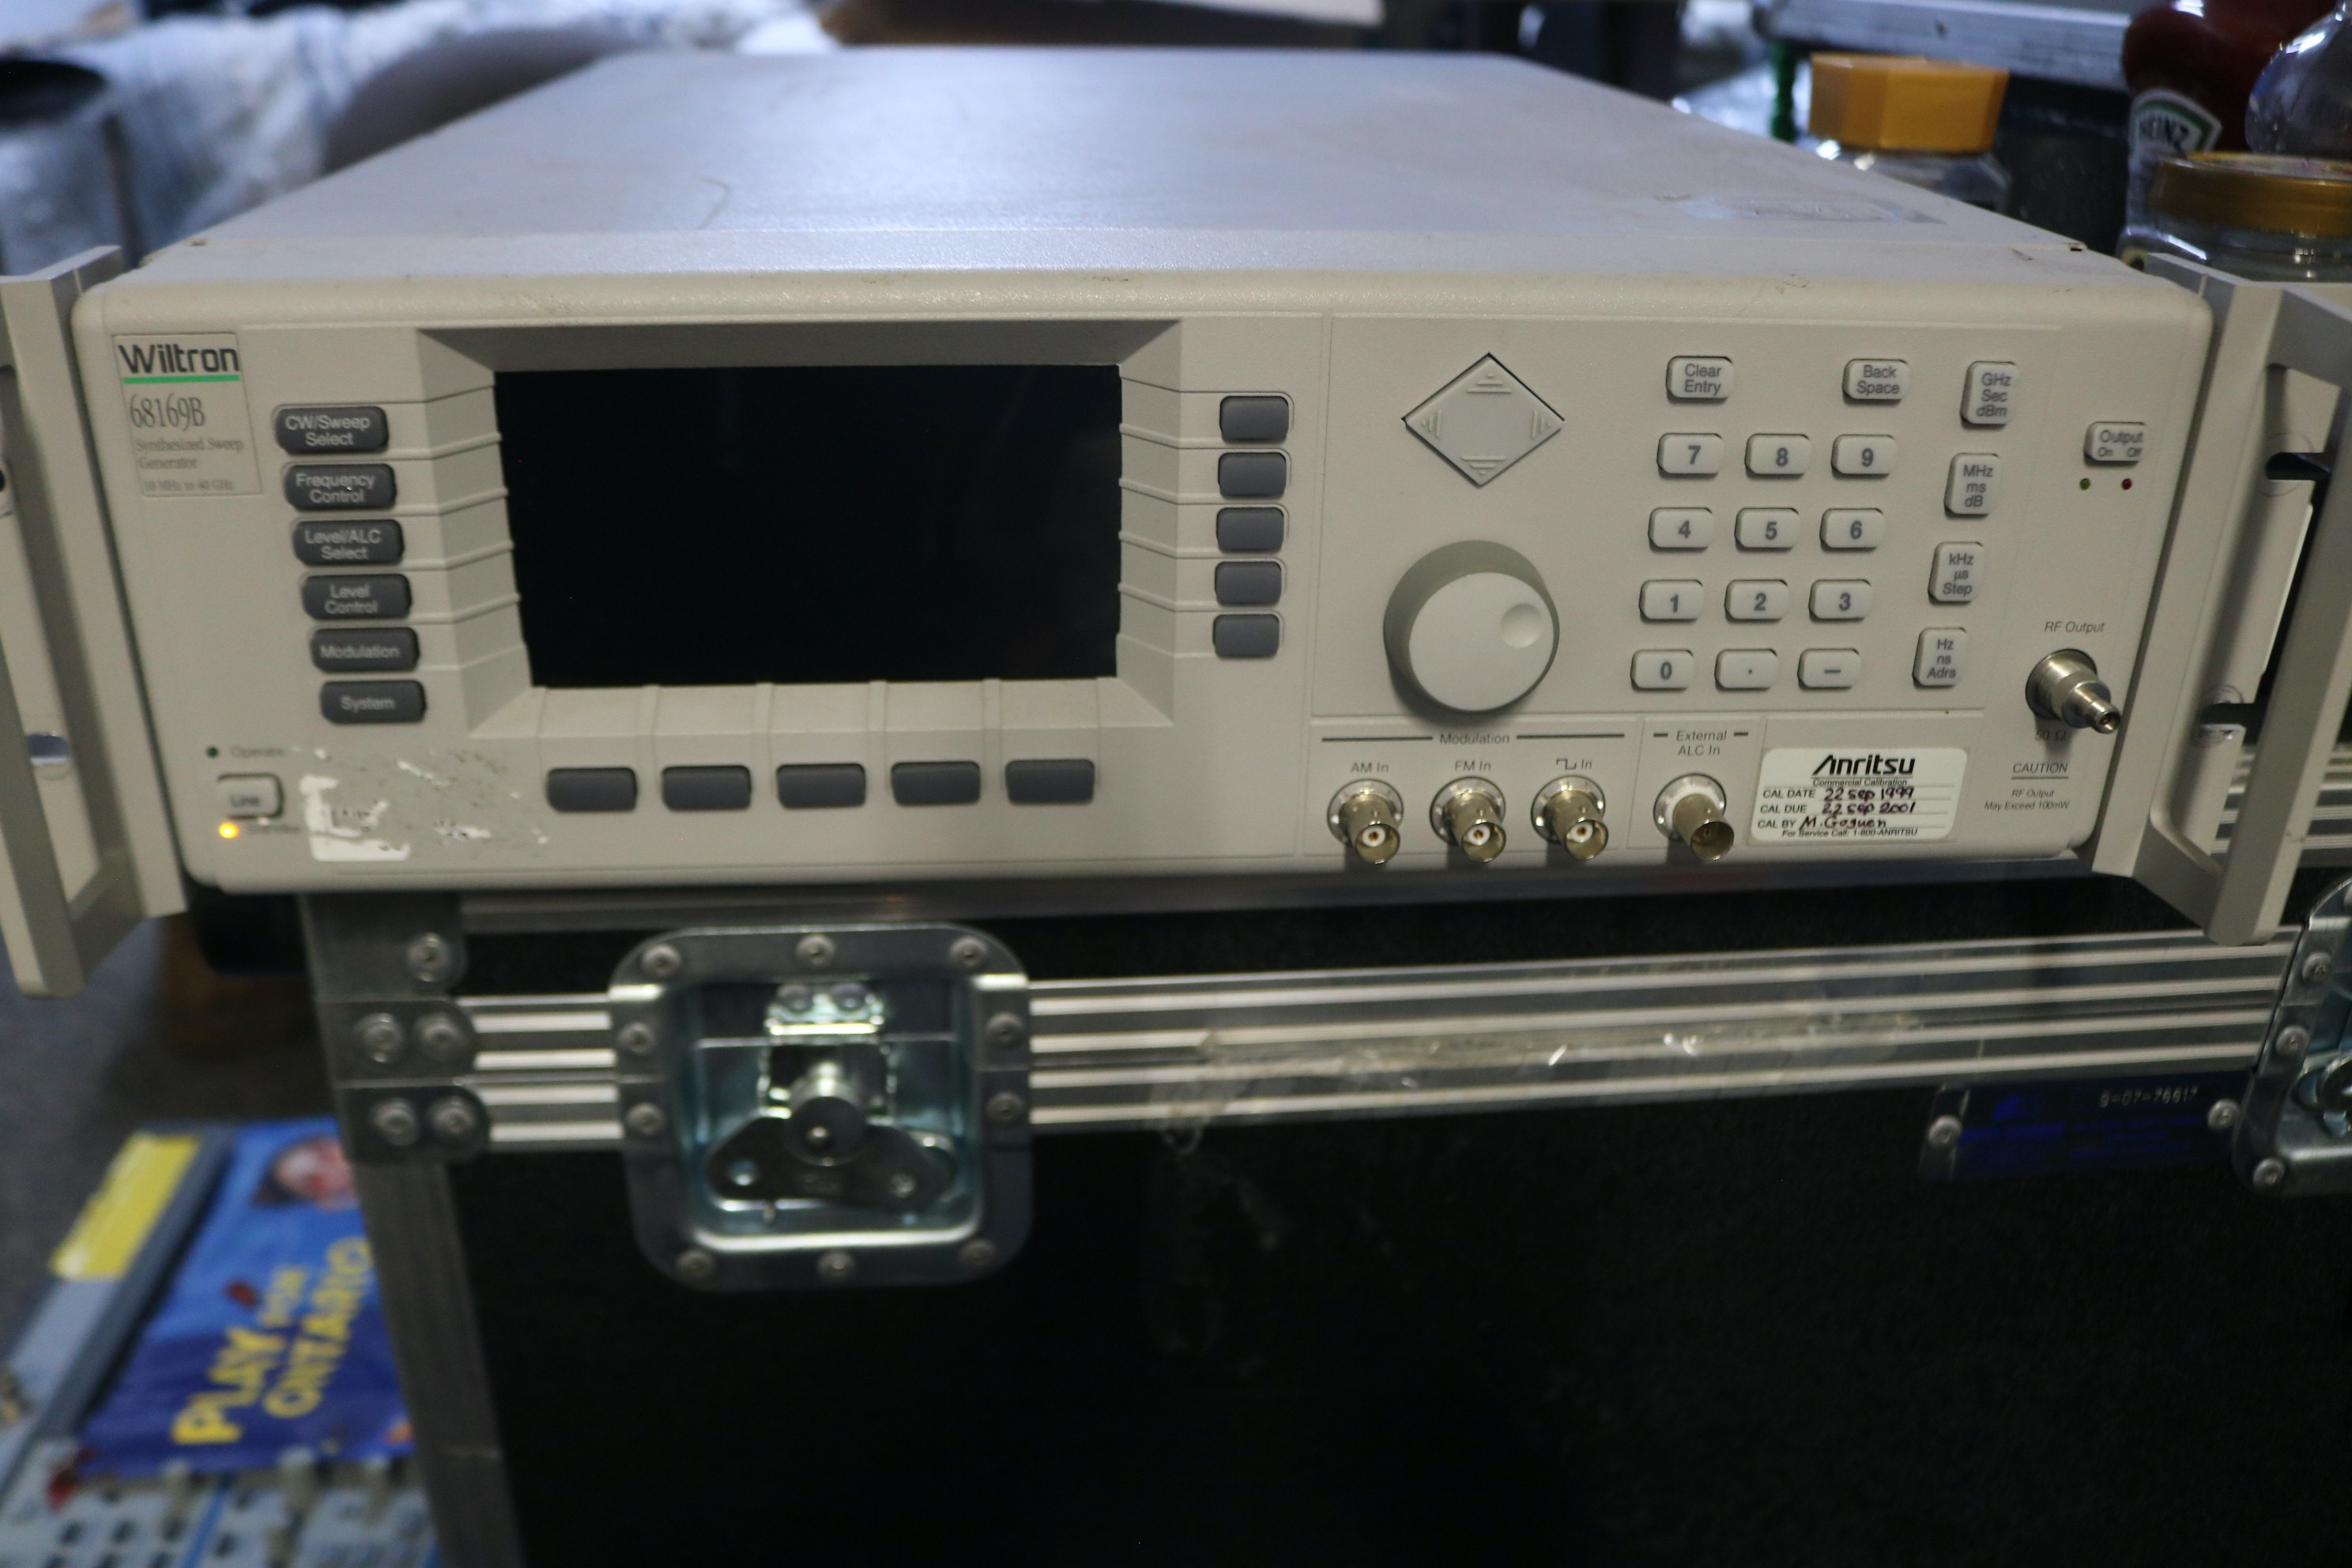 WILTRON (ANRITSU) 68169B  Signal generator with Option 14  (10Mhz - 40GHz) 